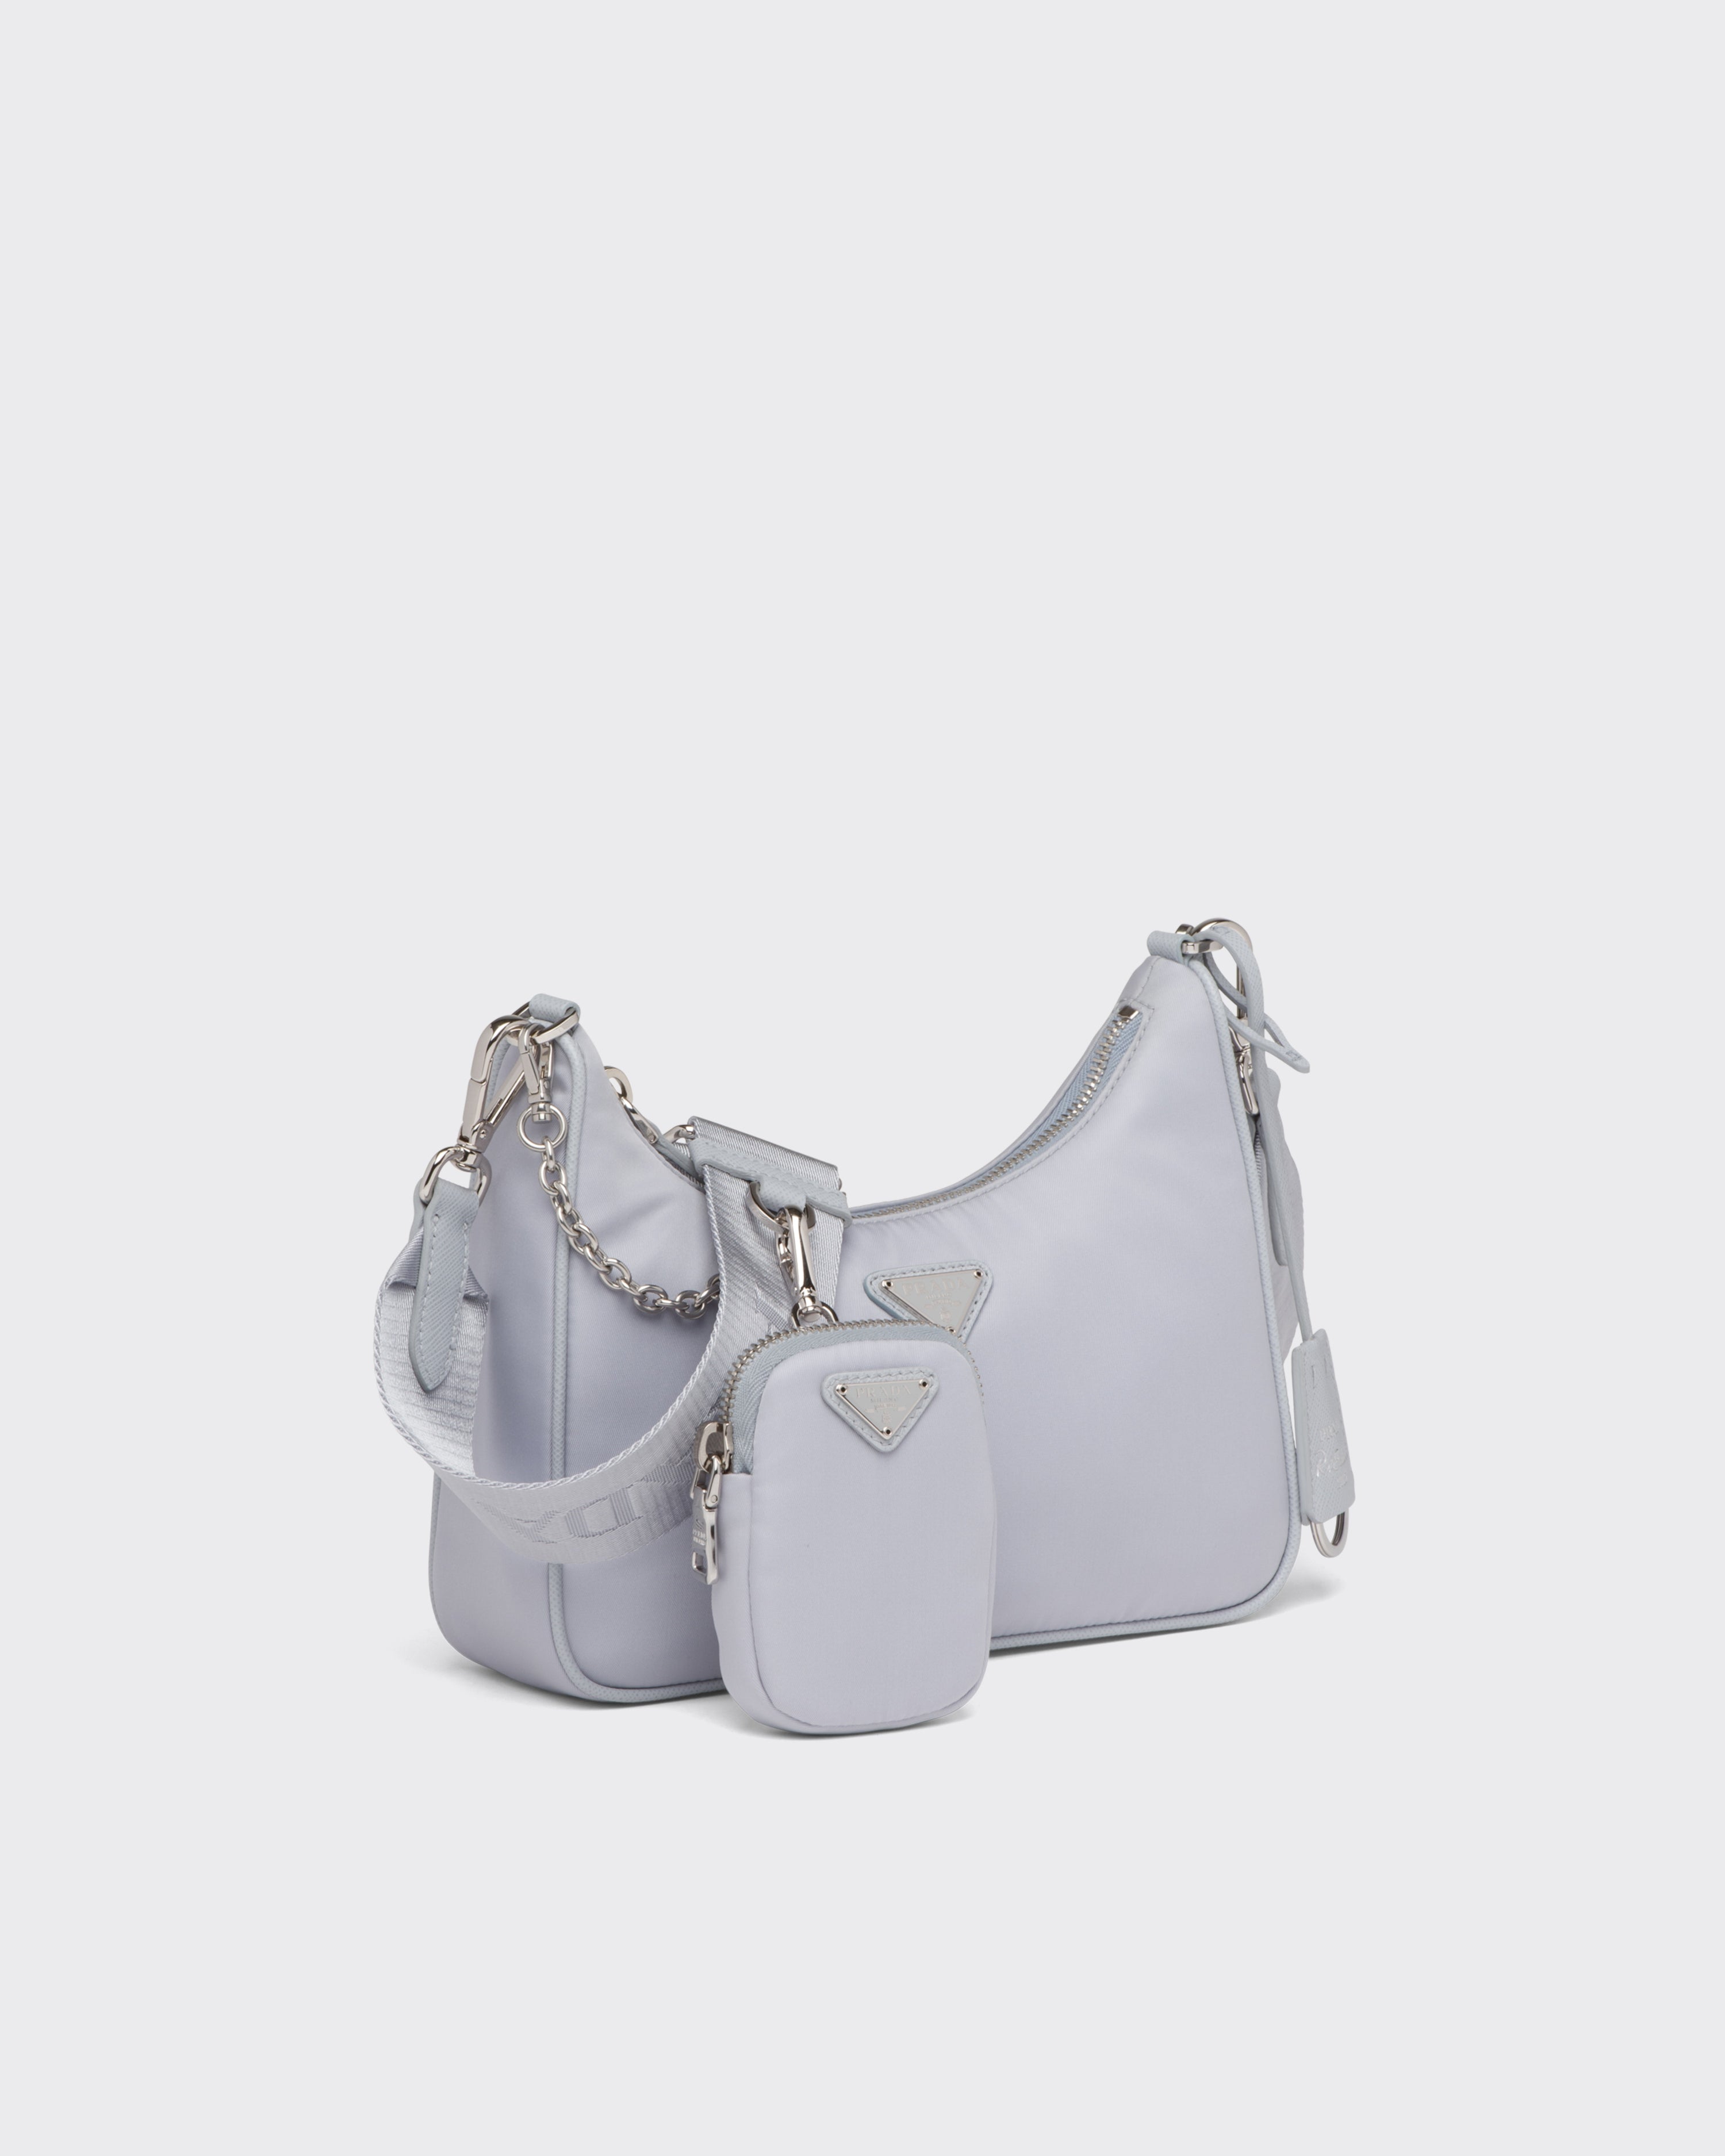 White Prada Re-edition 2005 Re-nylon Bag